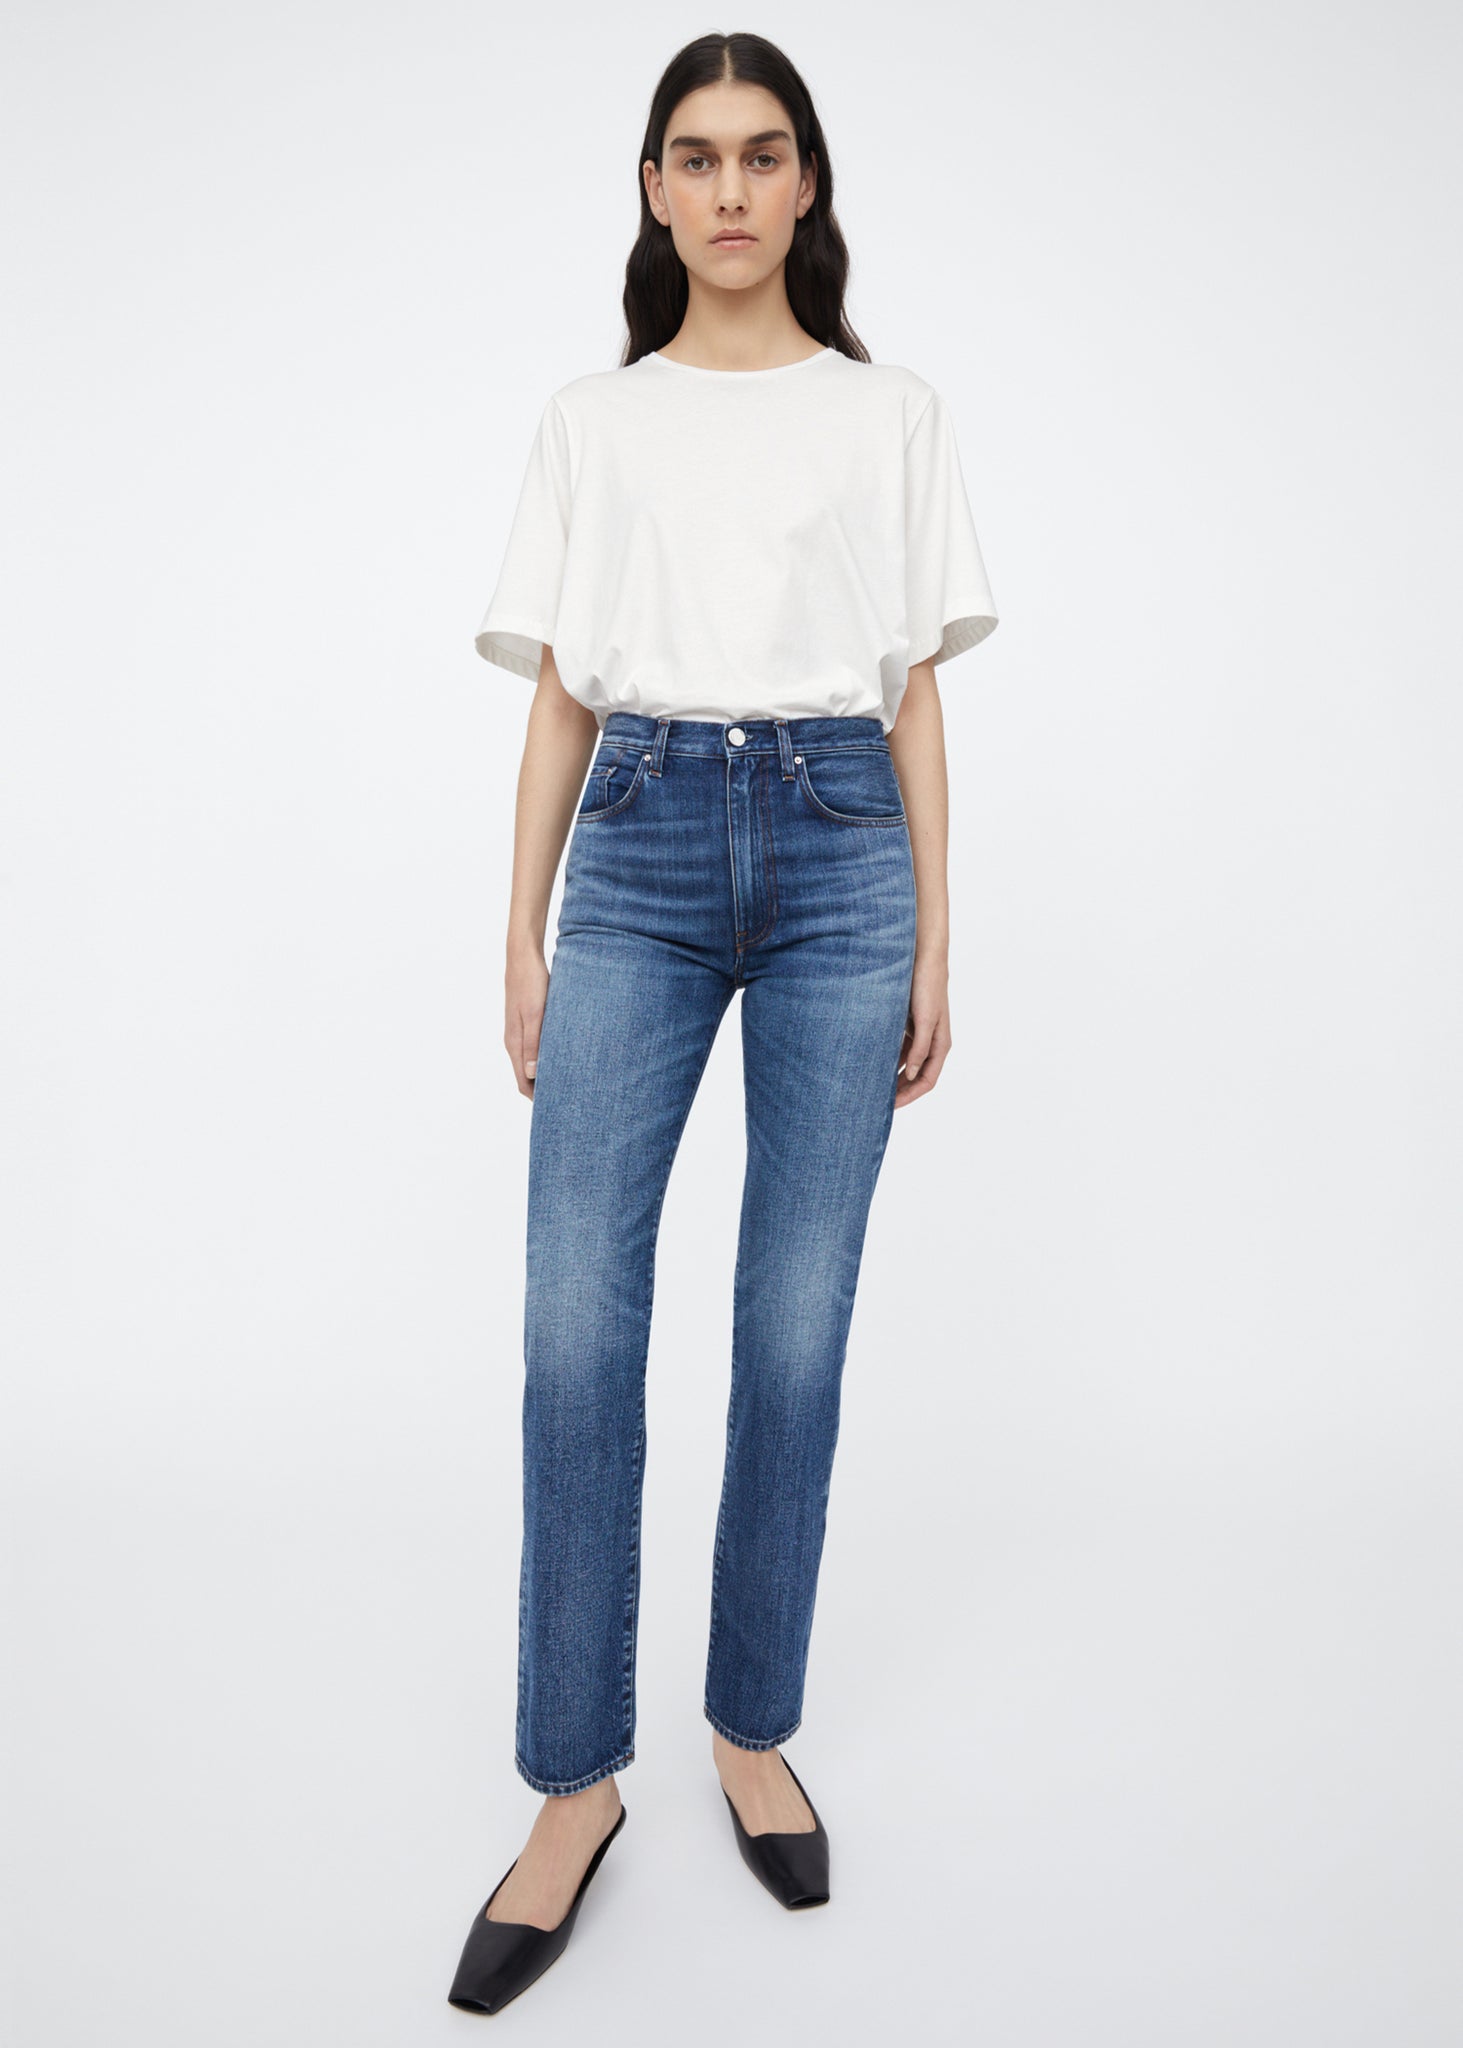 Women’s Designer Denim Jeans - Totême